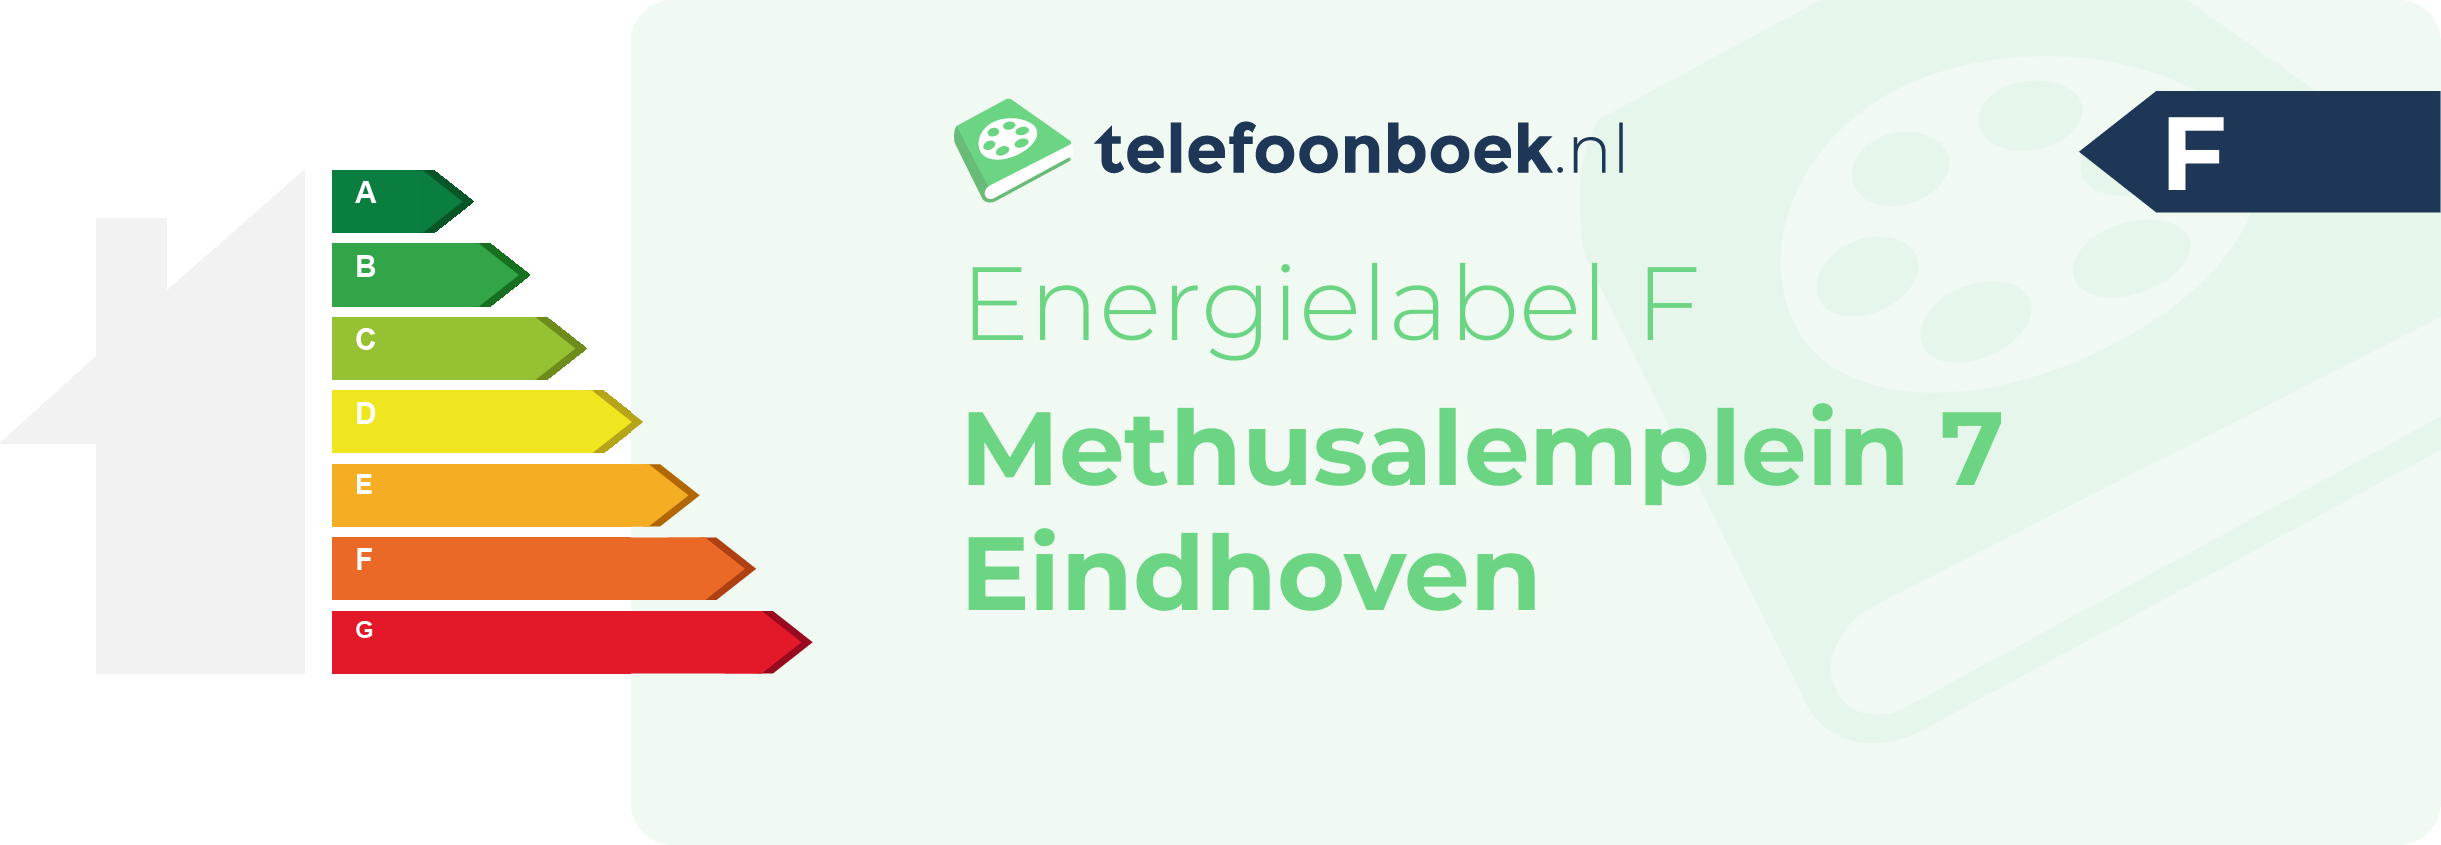 Energielabel Methusalemplein 7 Eindhoven